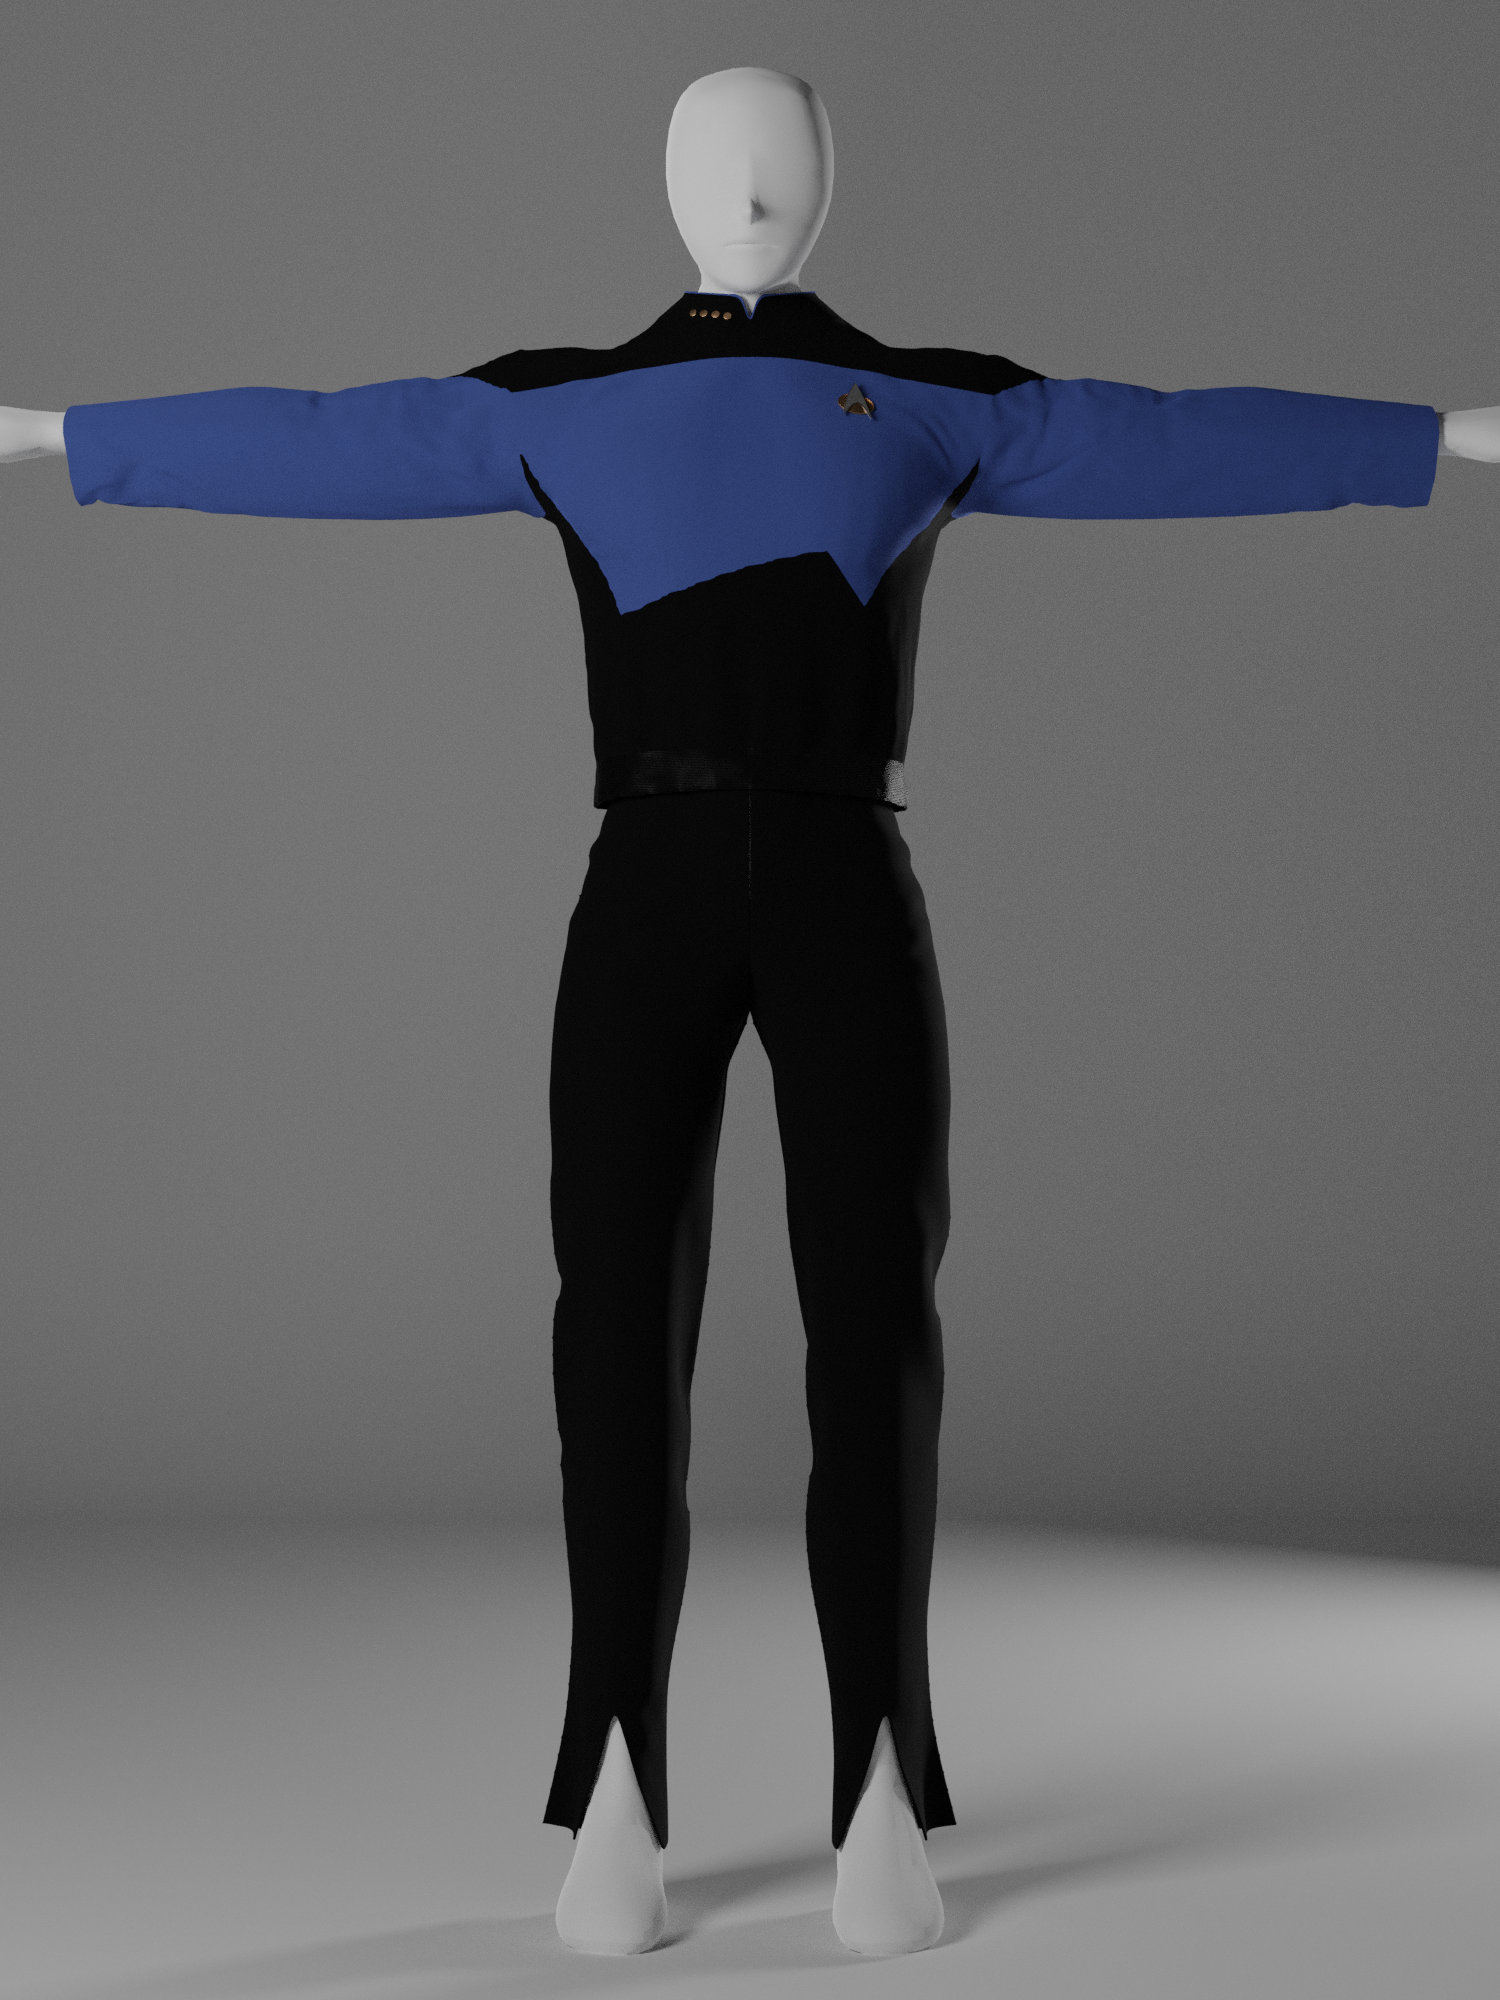 Star Trek TNG Uniform (S3+) preview image 2